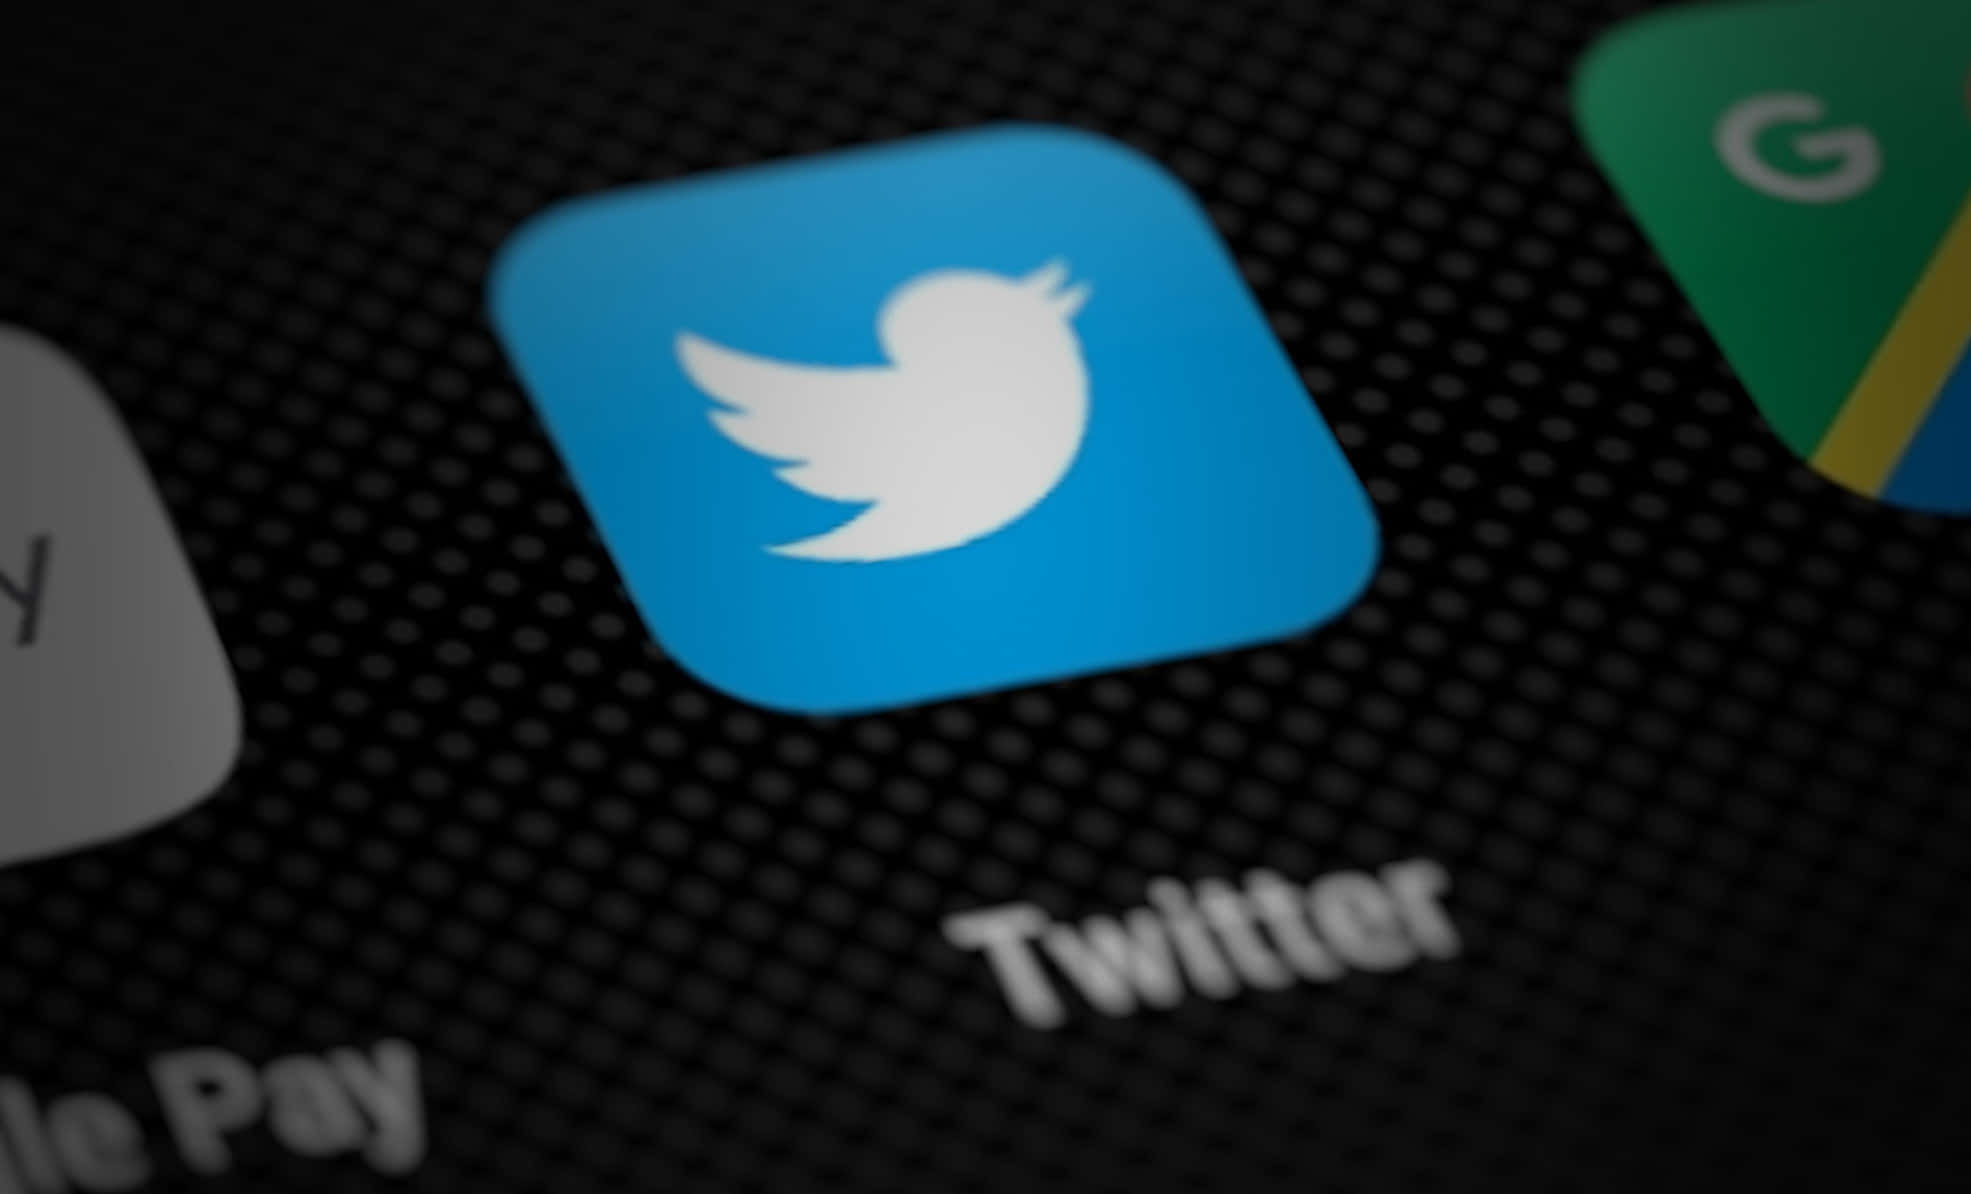 Twitter Logos On A Black Screen